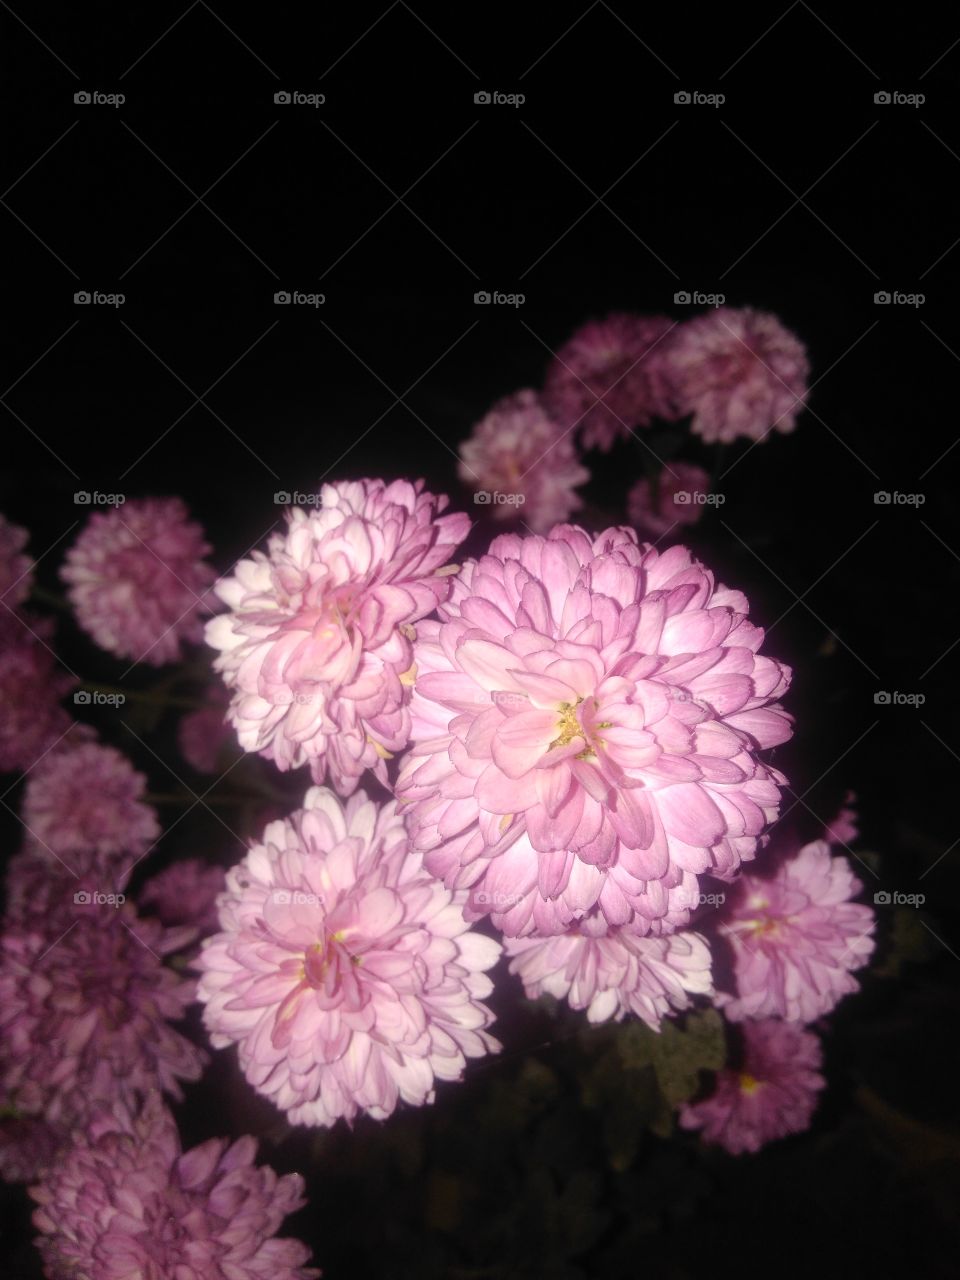 Pink flowers
pink chrysanthemum